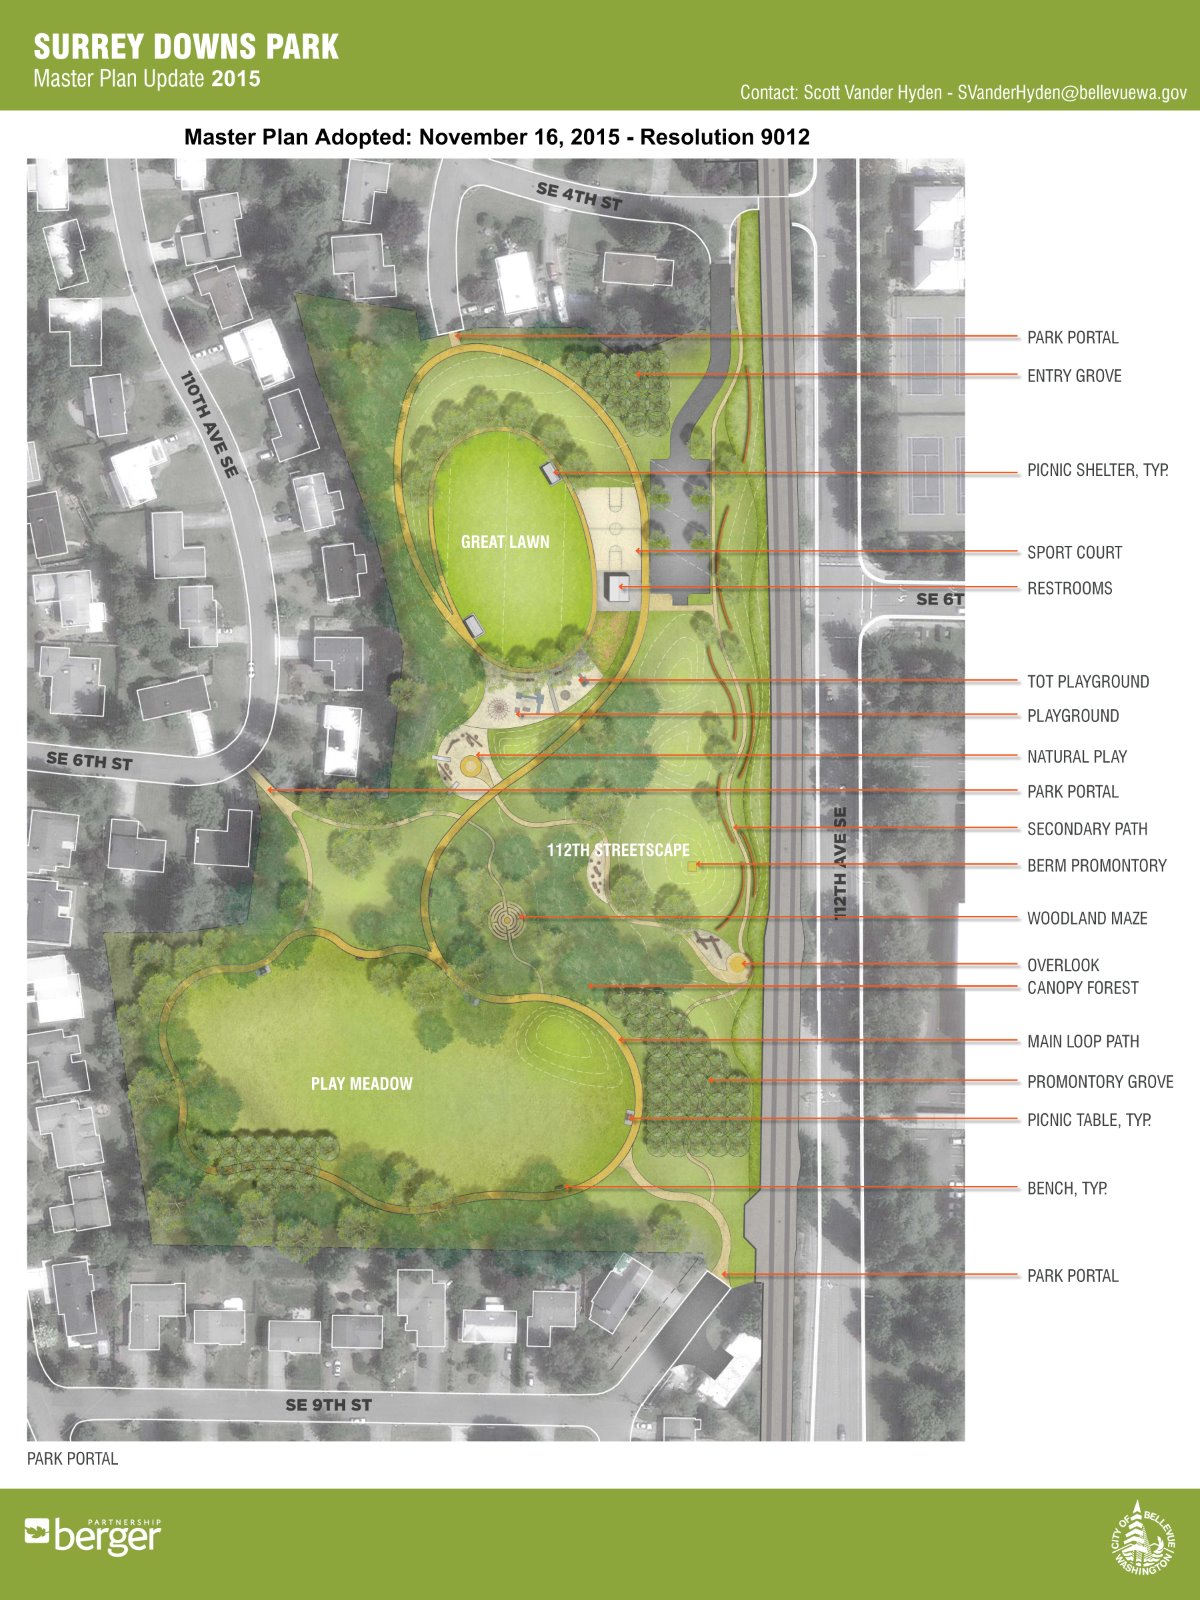 Surrey Downs Park Master Plan - see text below for descripti